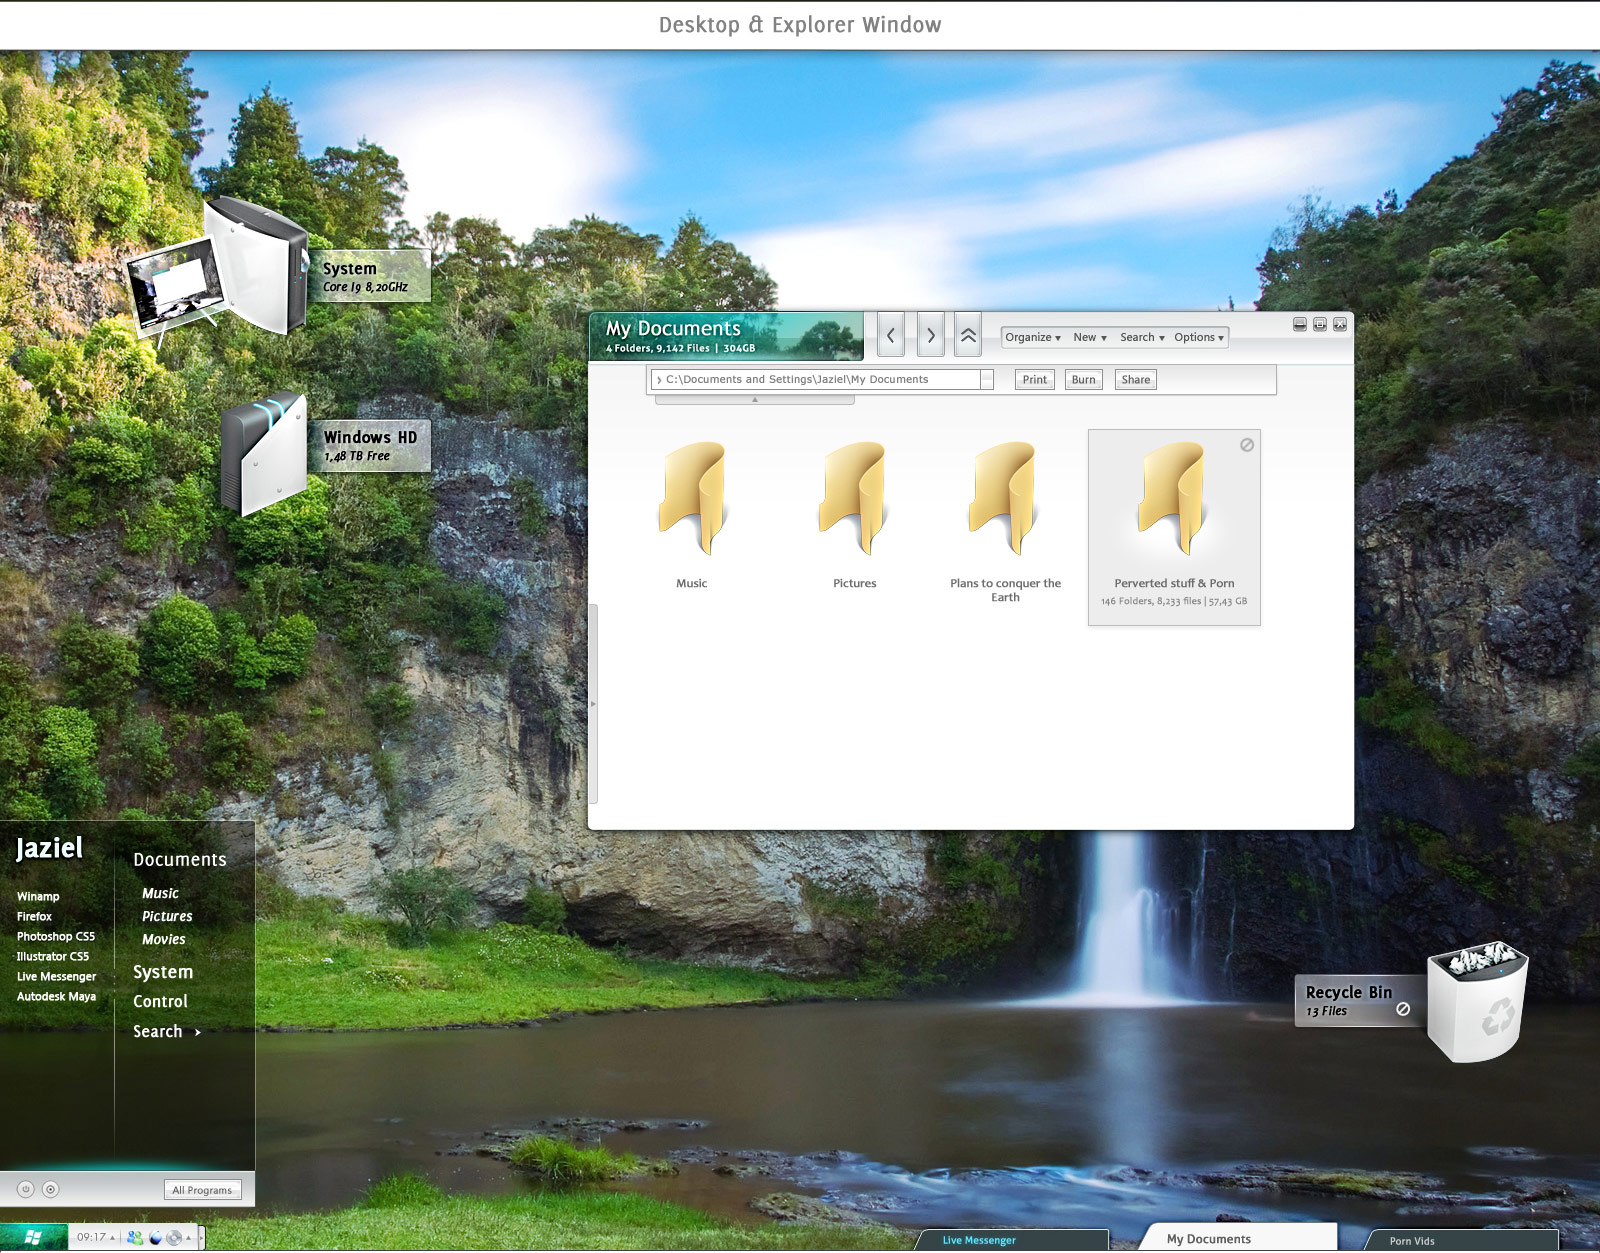 mactracker 7.6.5 for windows